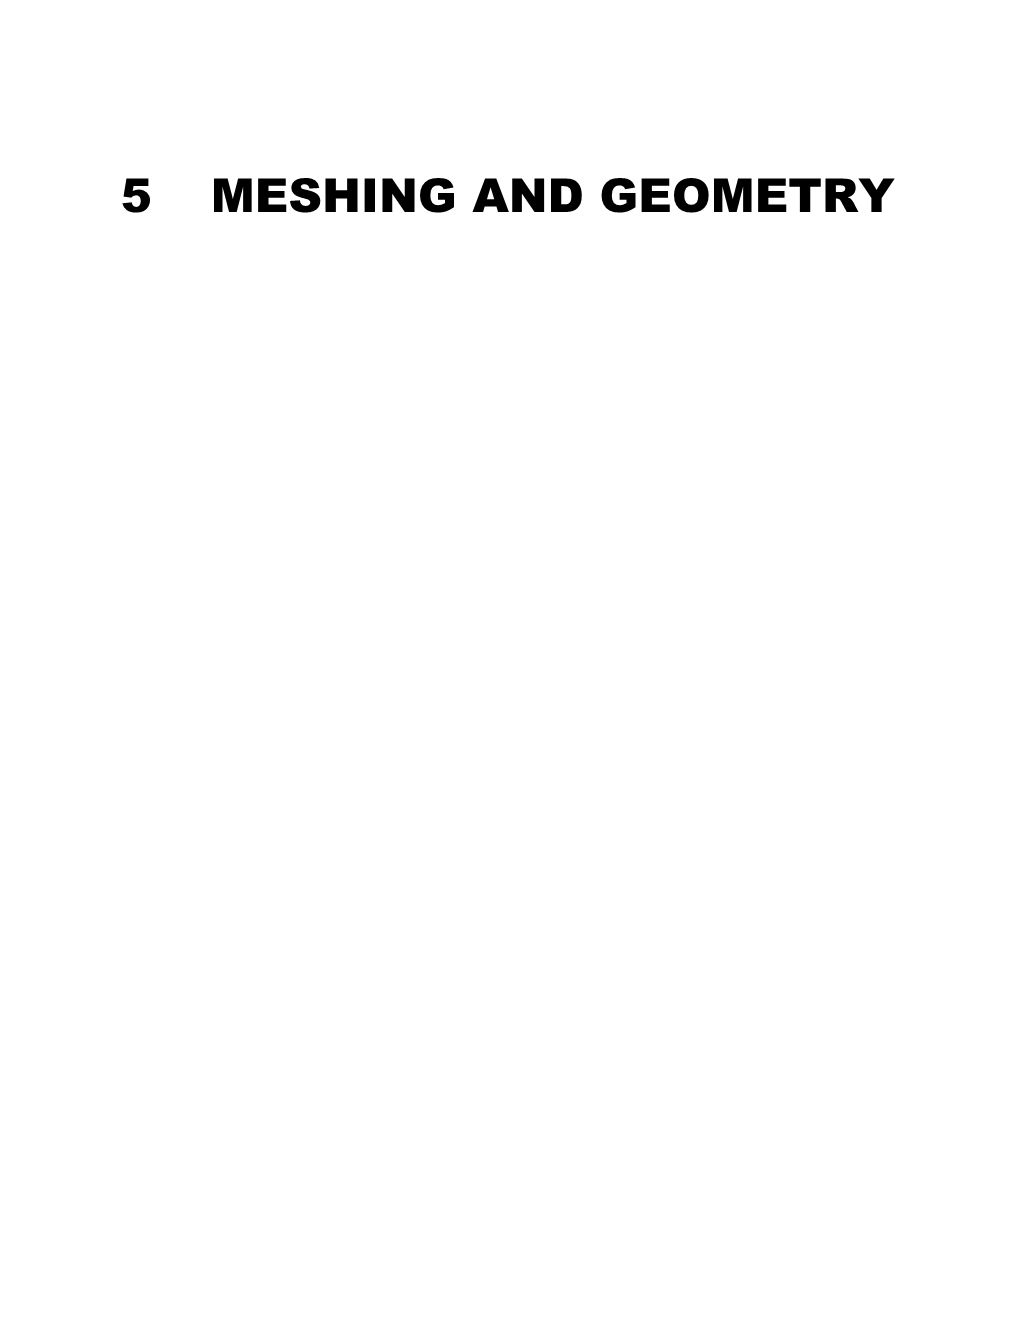 Meshing and Geometry